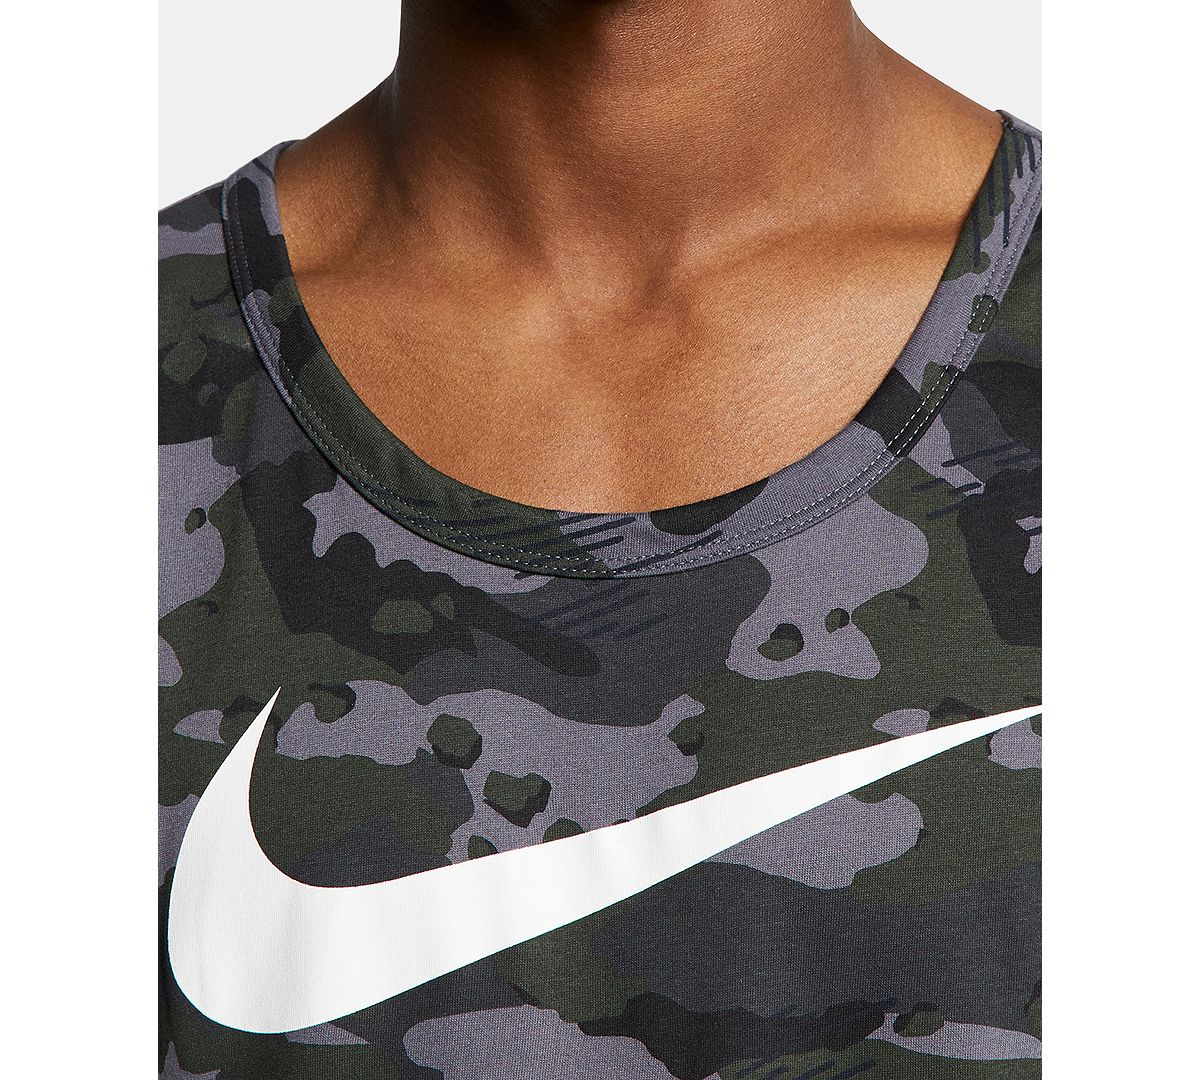 Nike Dri-fit Camo Training Tank Top Dark Grey